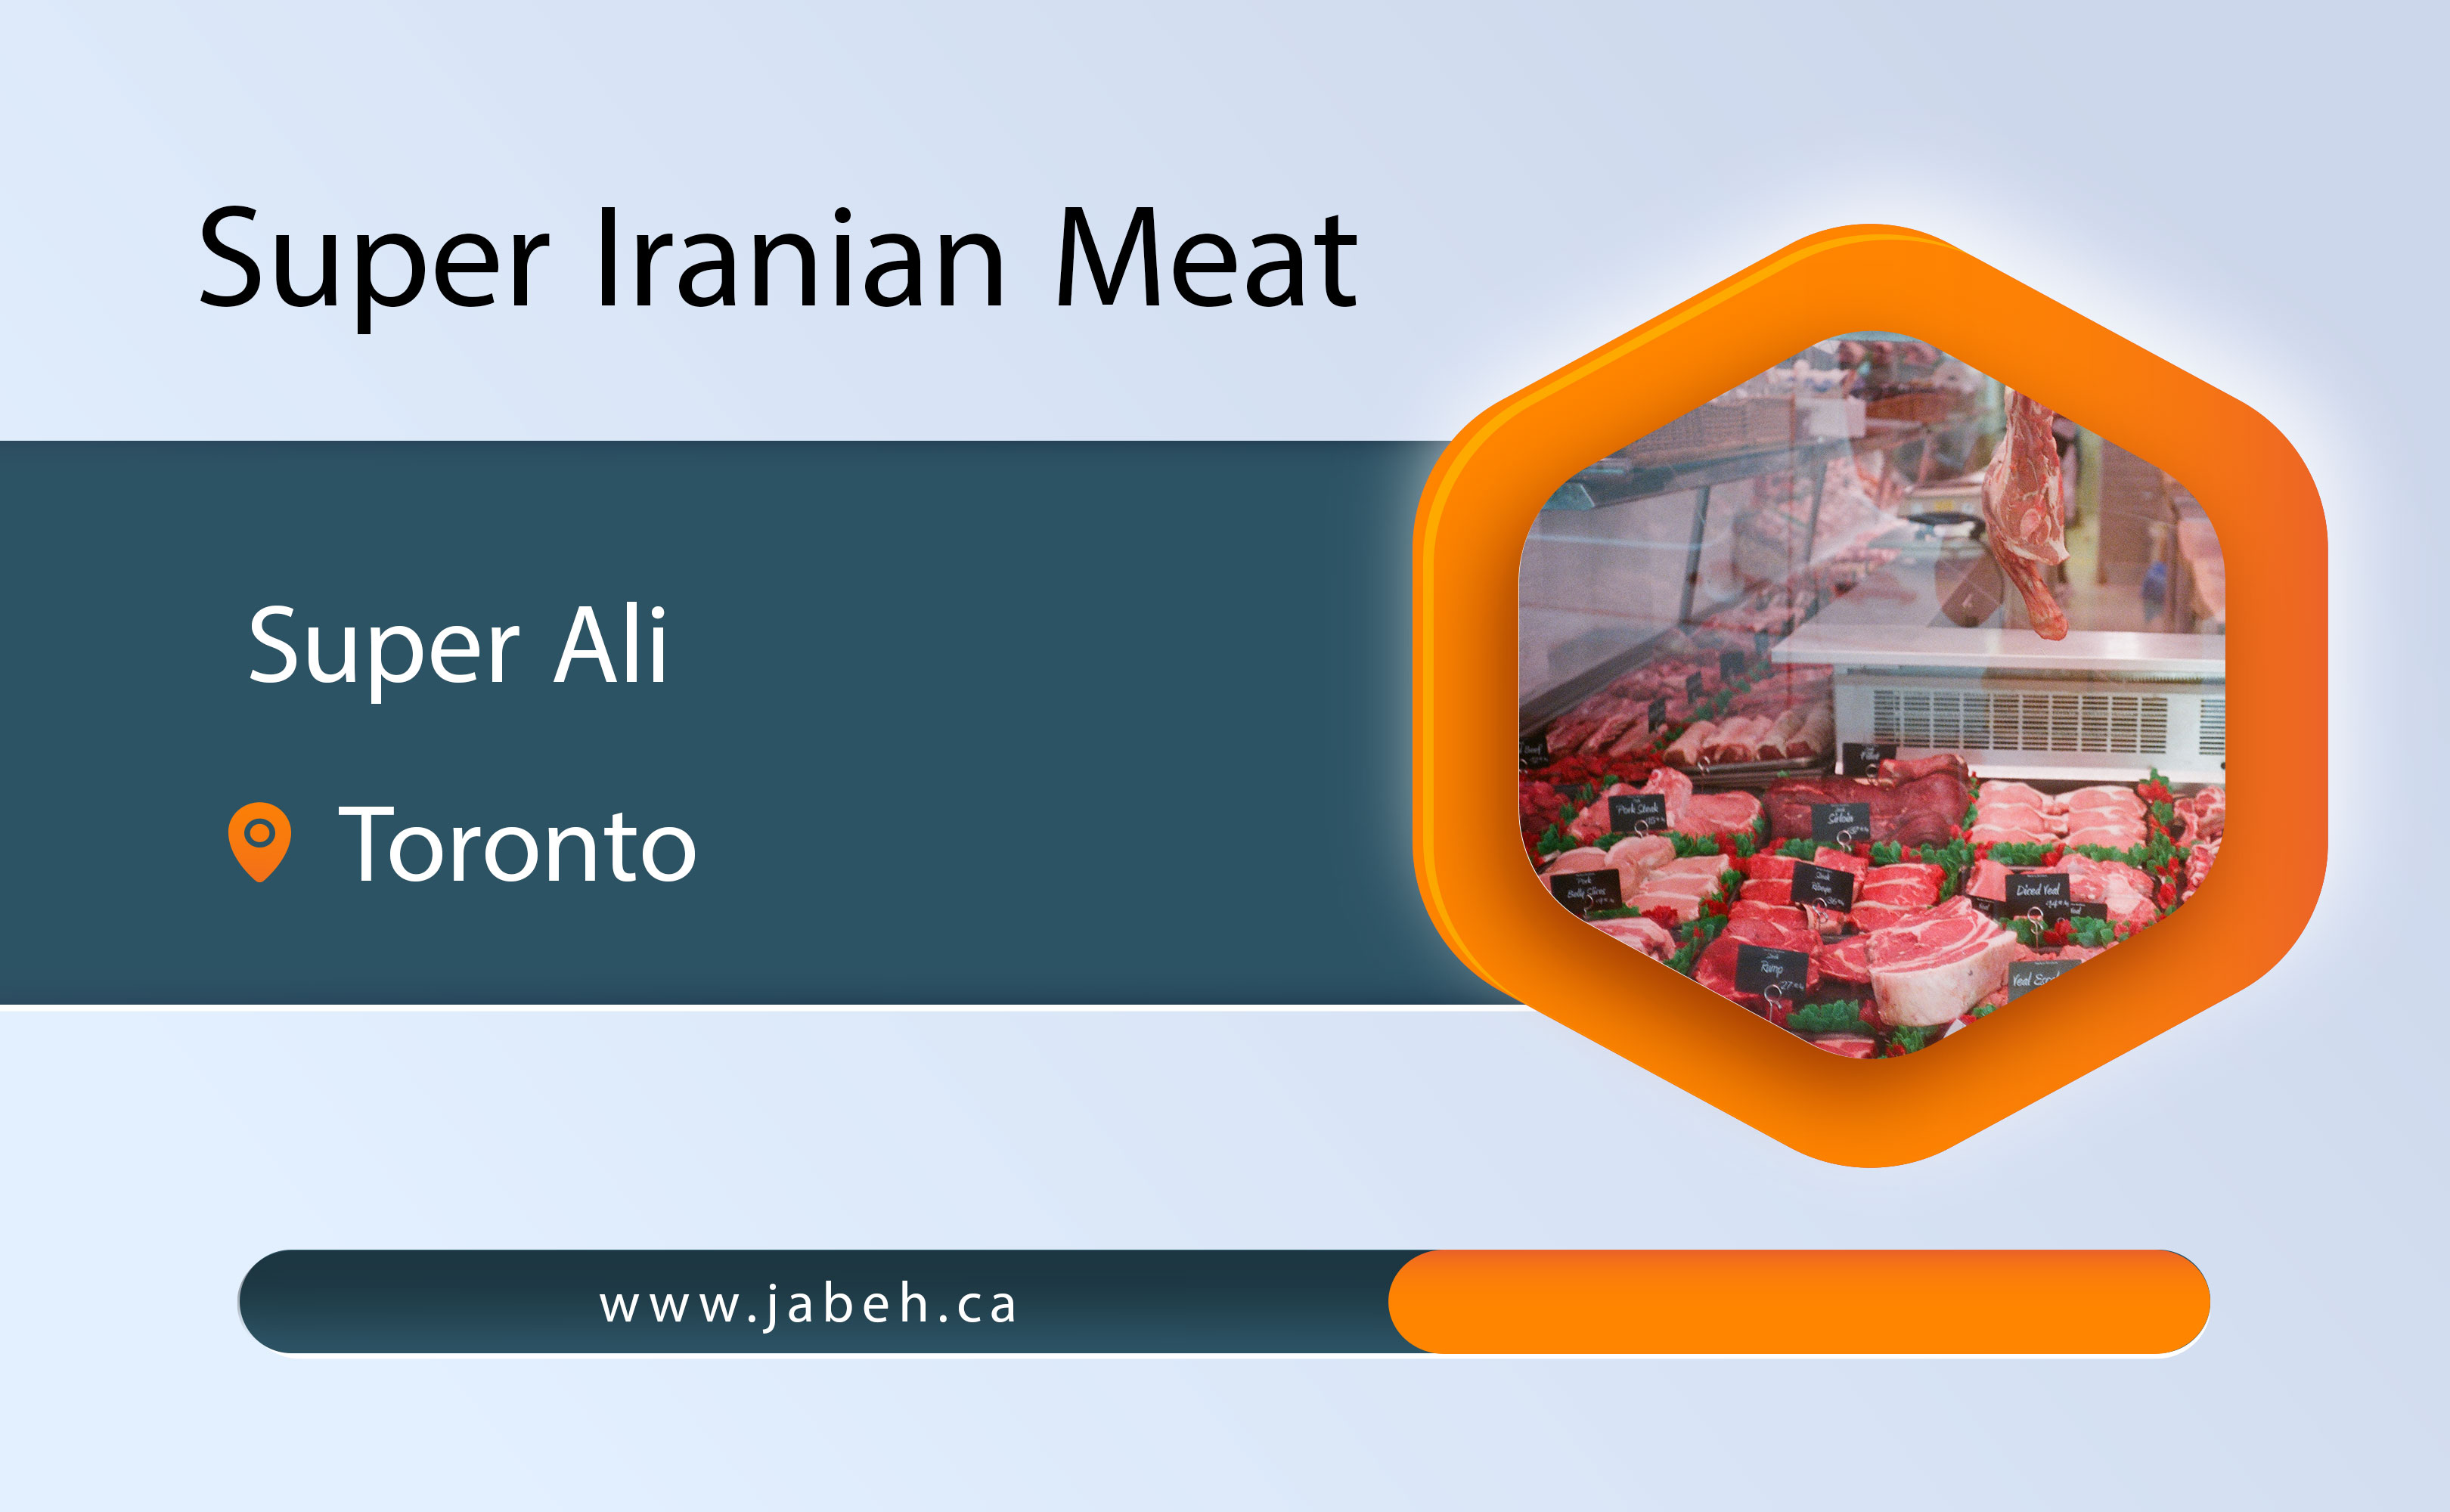 Ali Iranian Super Meat in Toronto